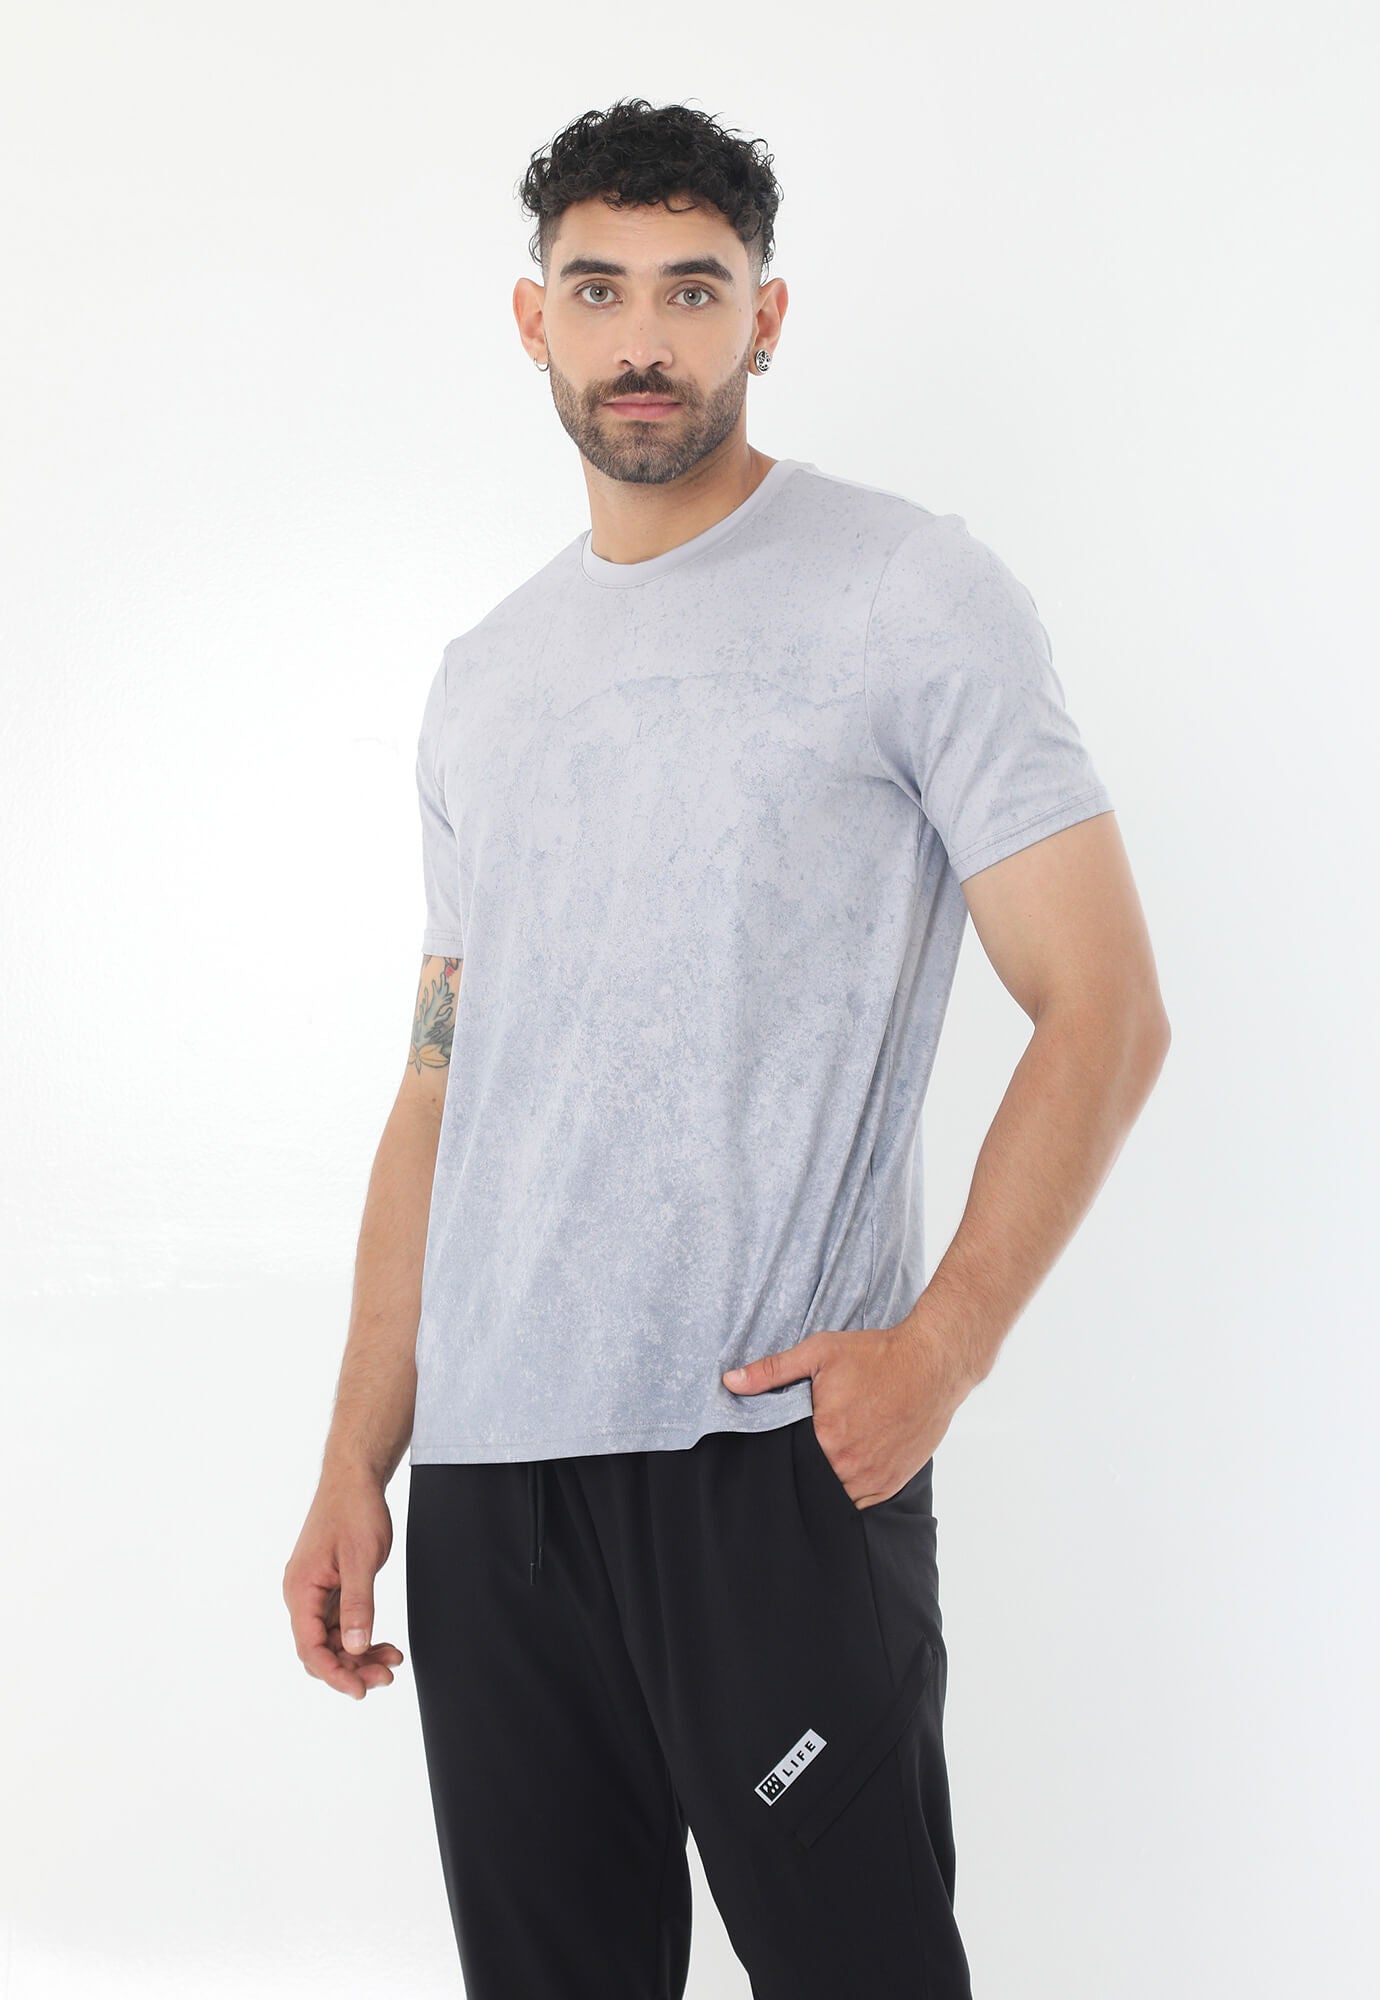 Camiseta deportiva gris silueta semi ajustada con cuello redondo sublimada para hombre